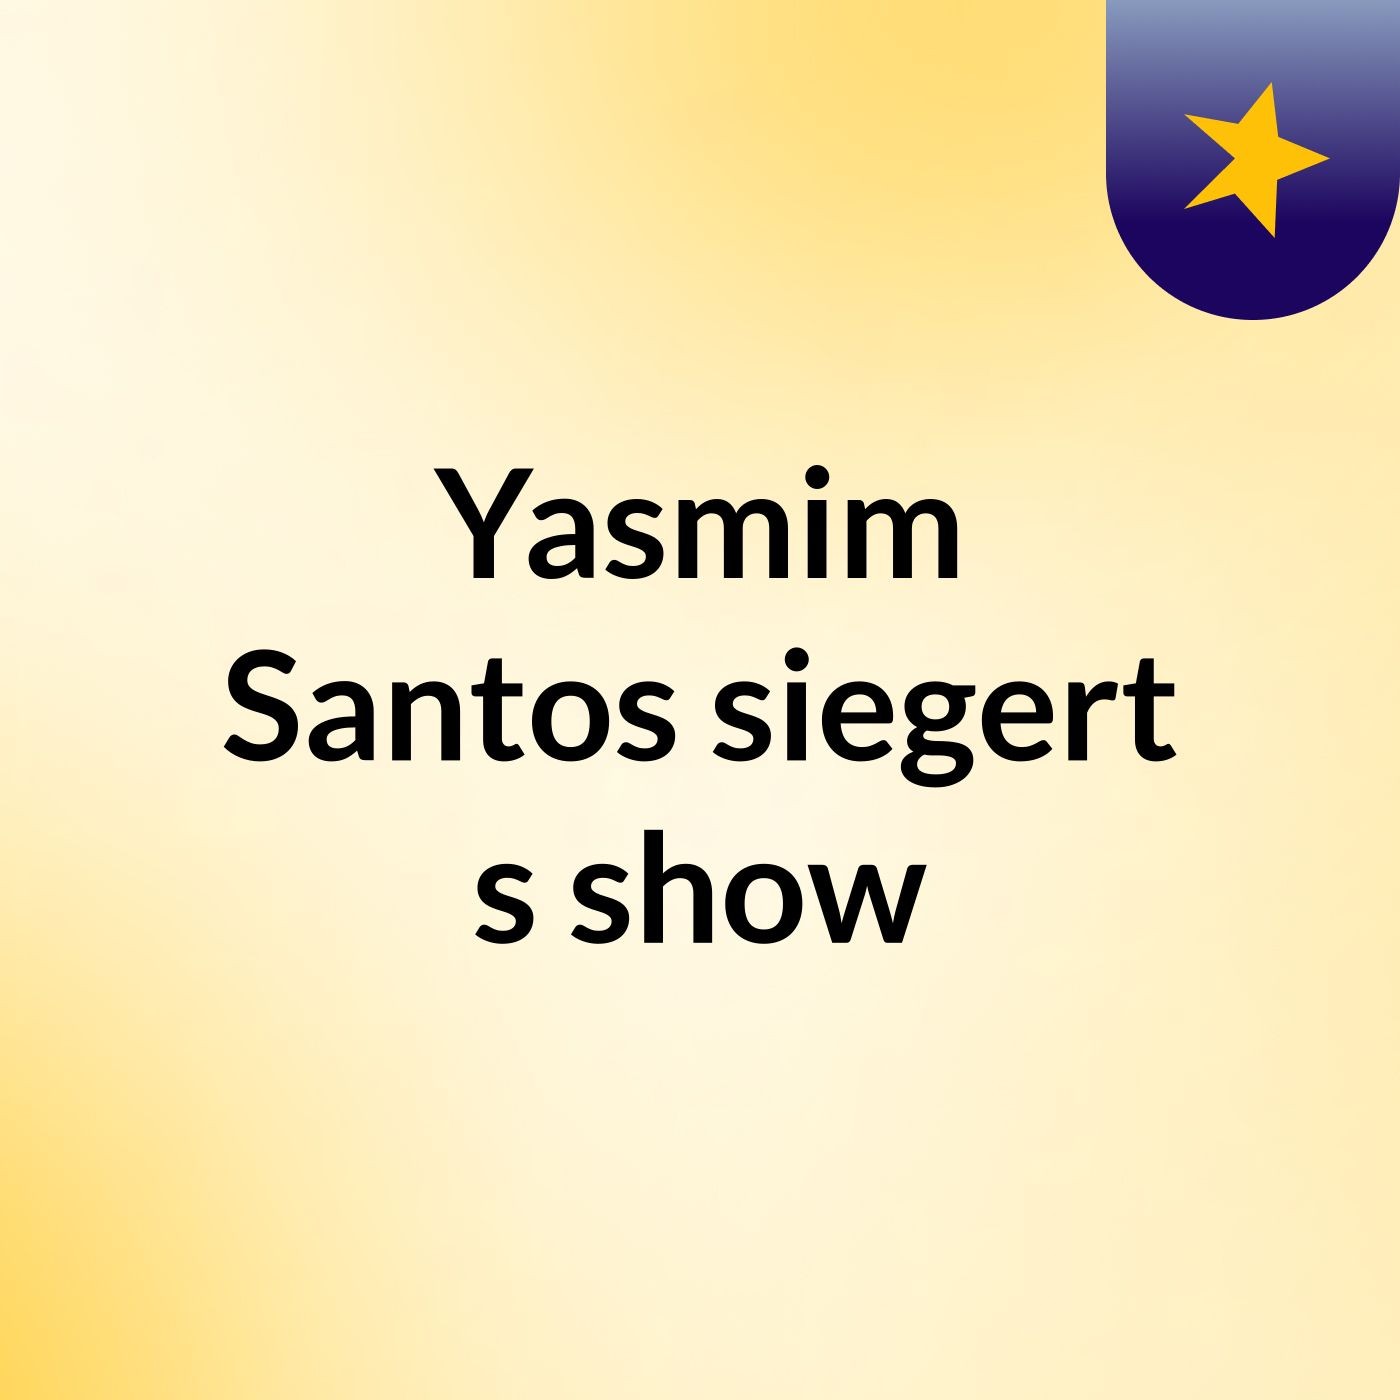 Yasmim Santos siegert's show